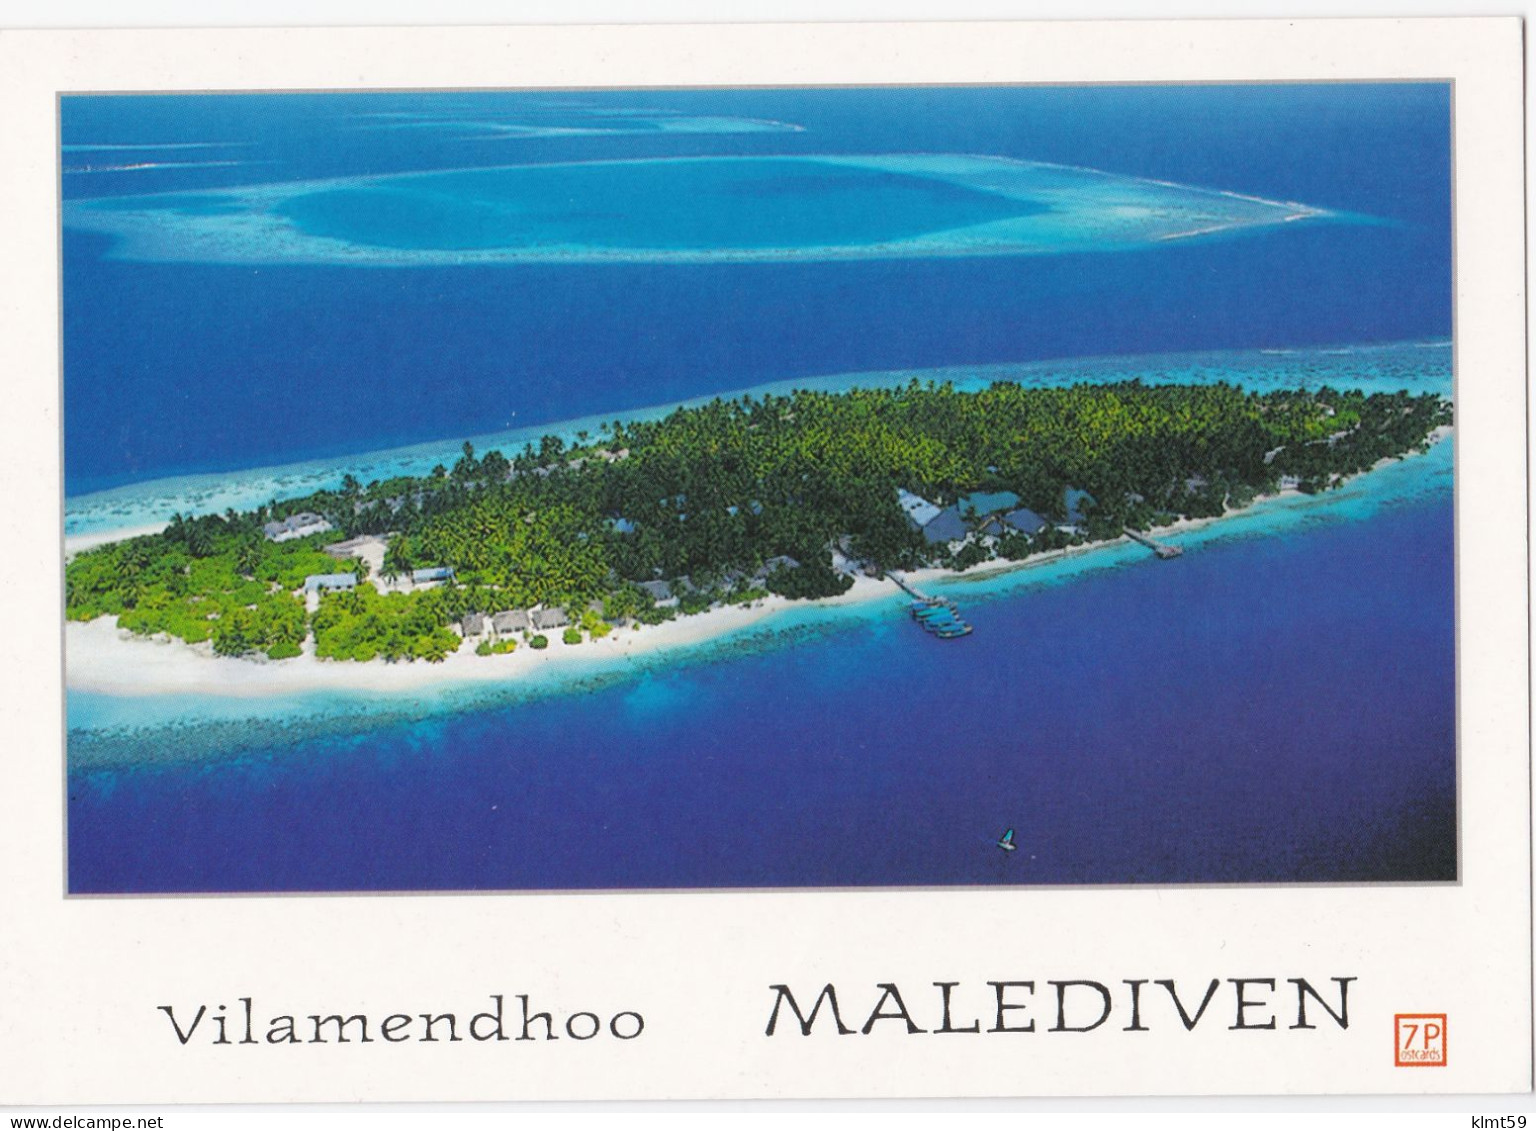 Vilamendhoo - Maldiven